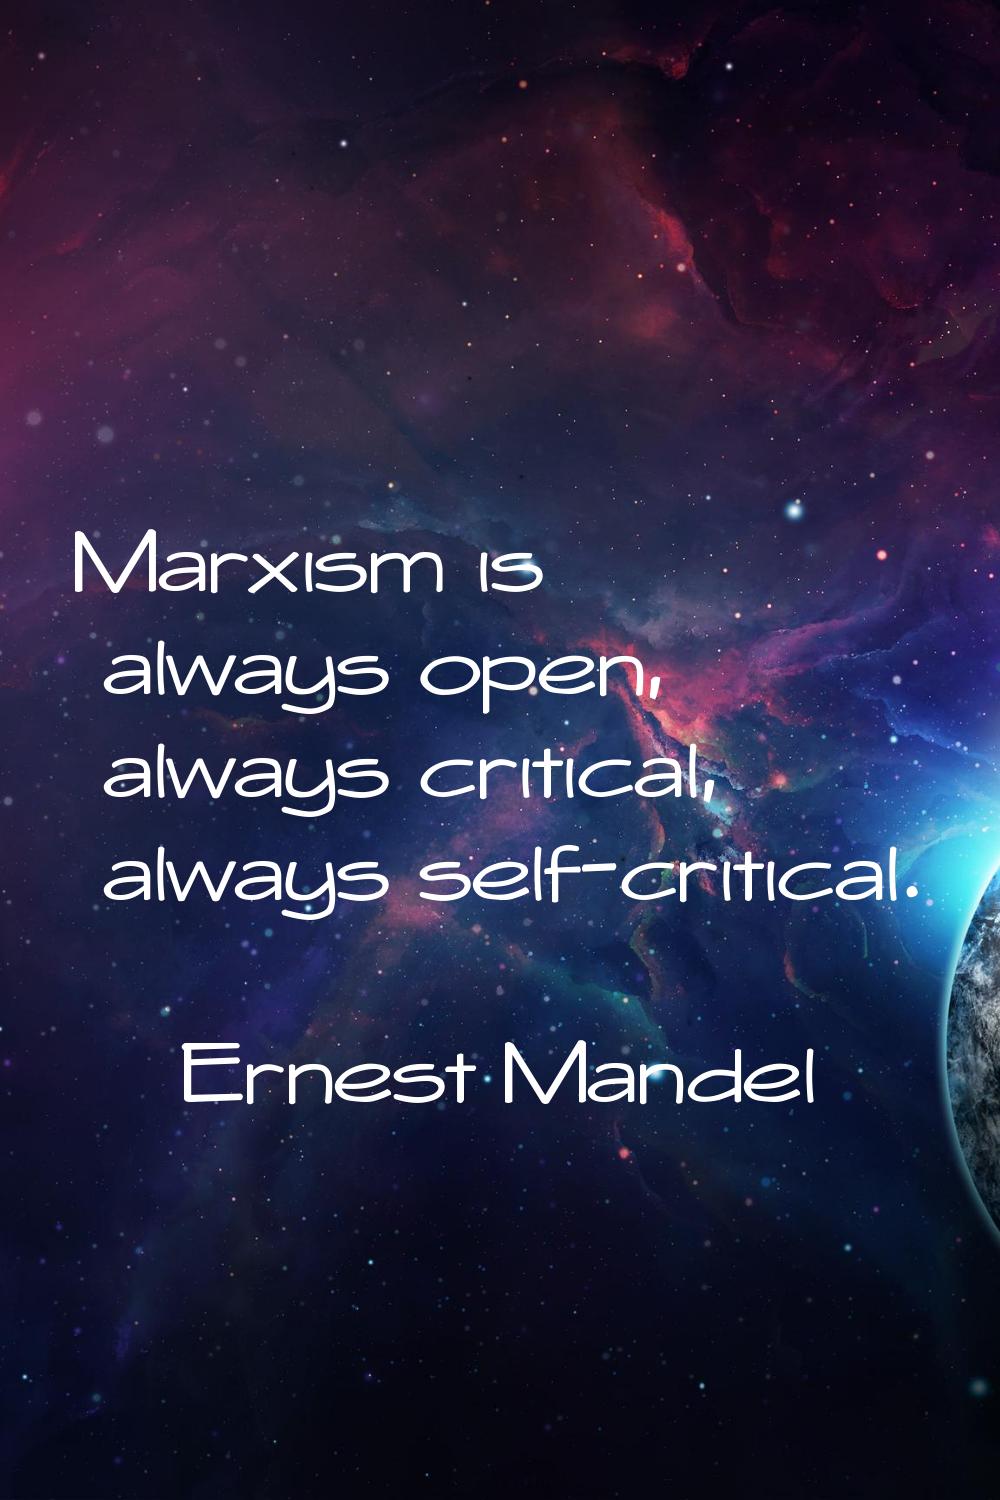 Marxism is always open, always critical, always self-critical.